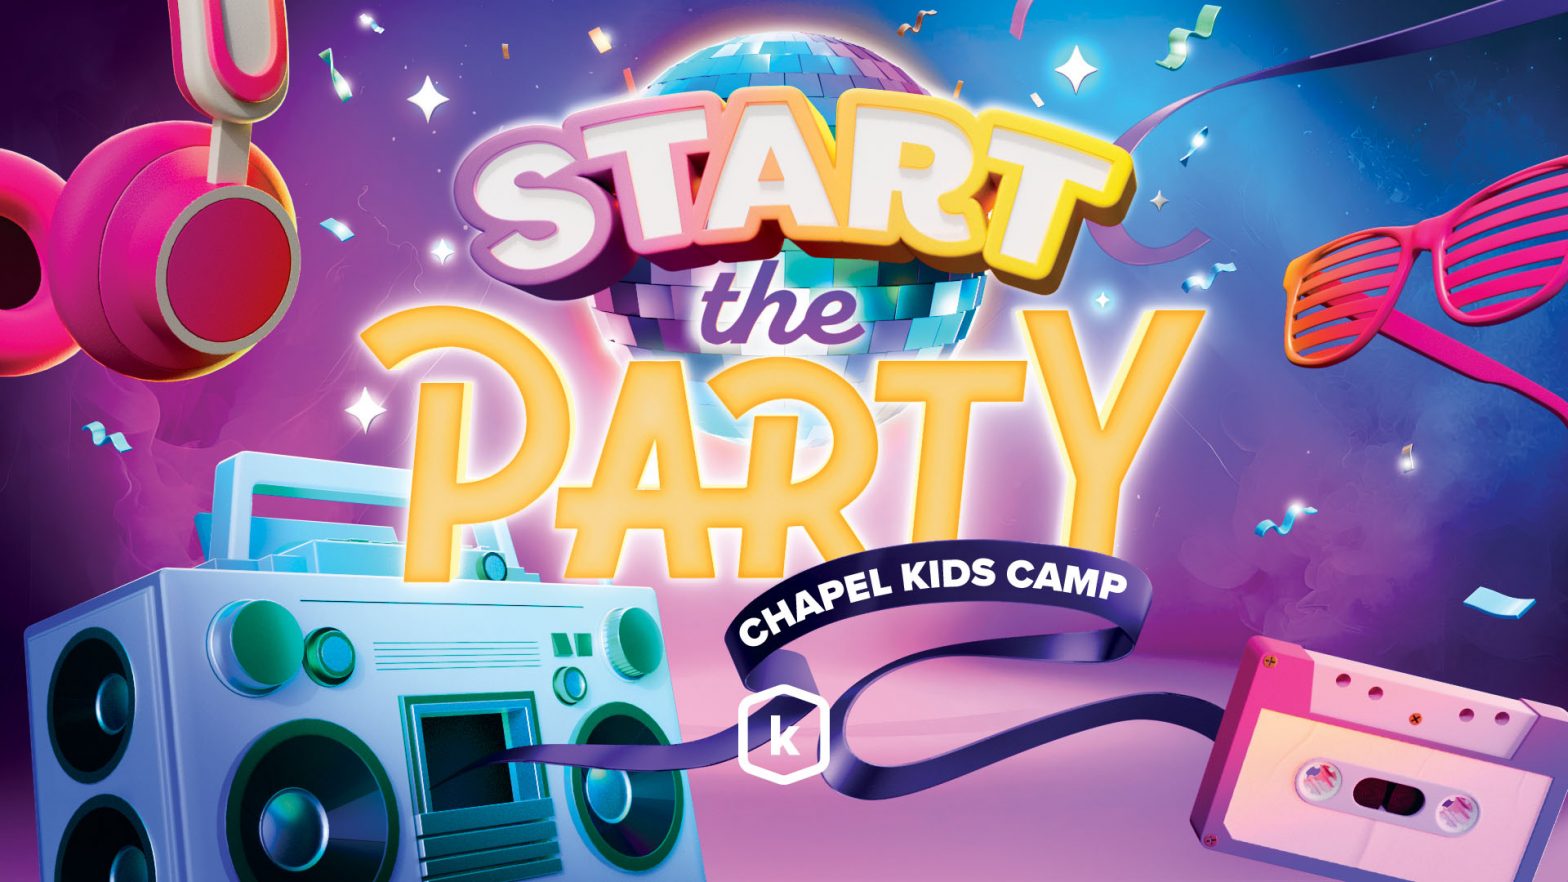 Chapel Kids Camp event image